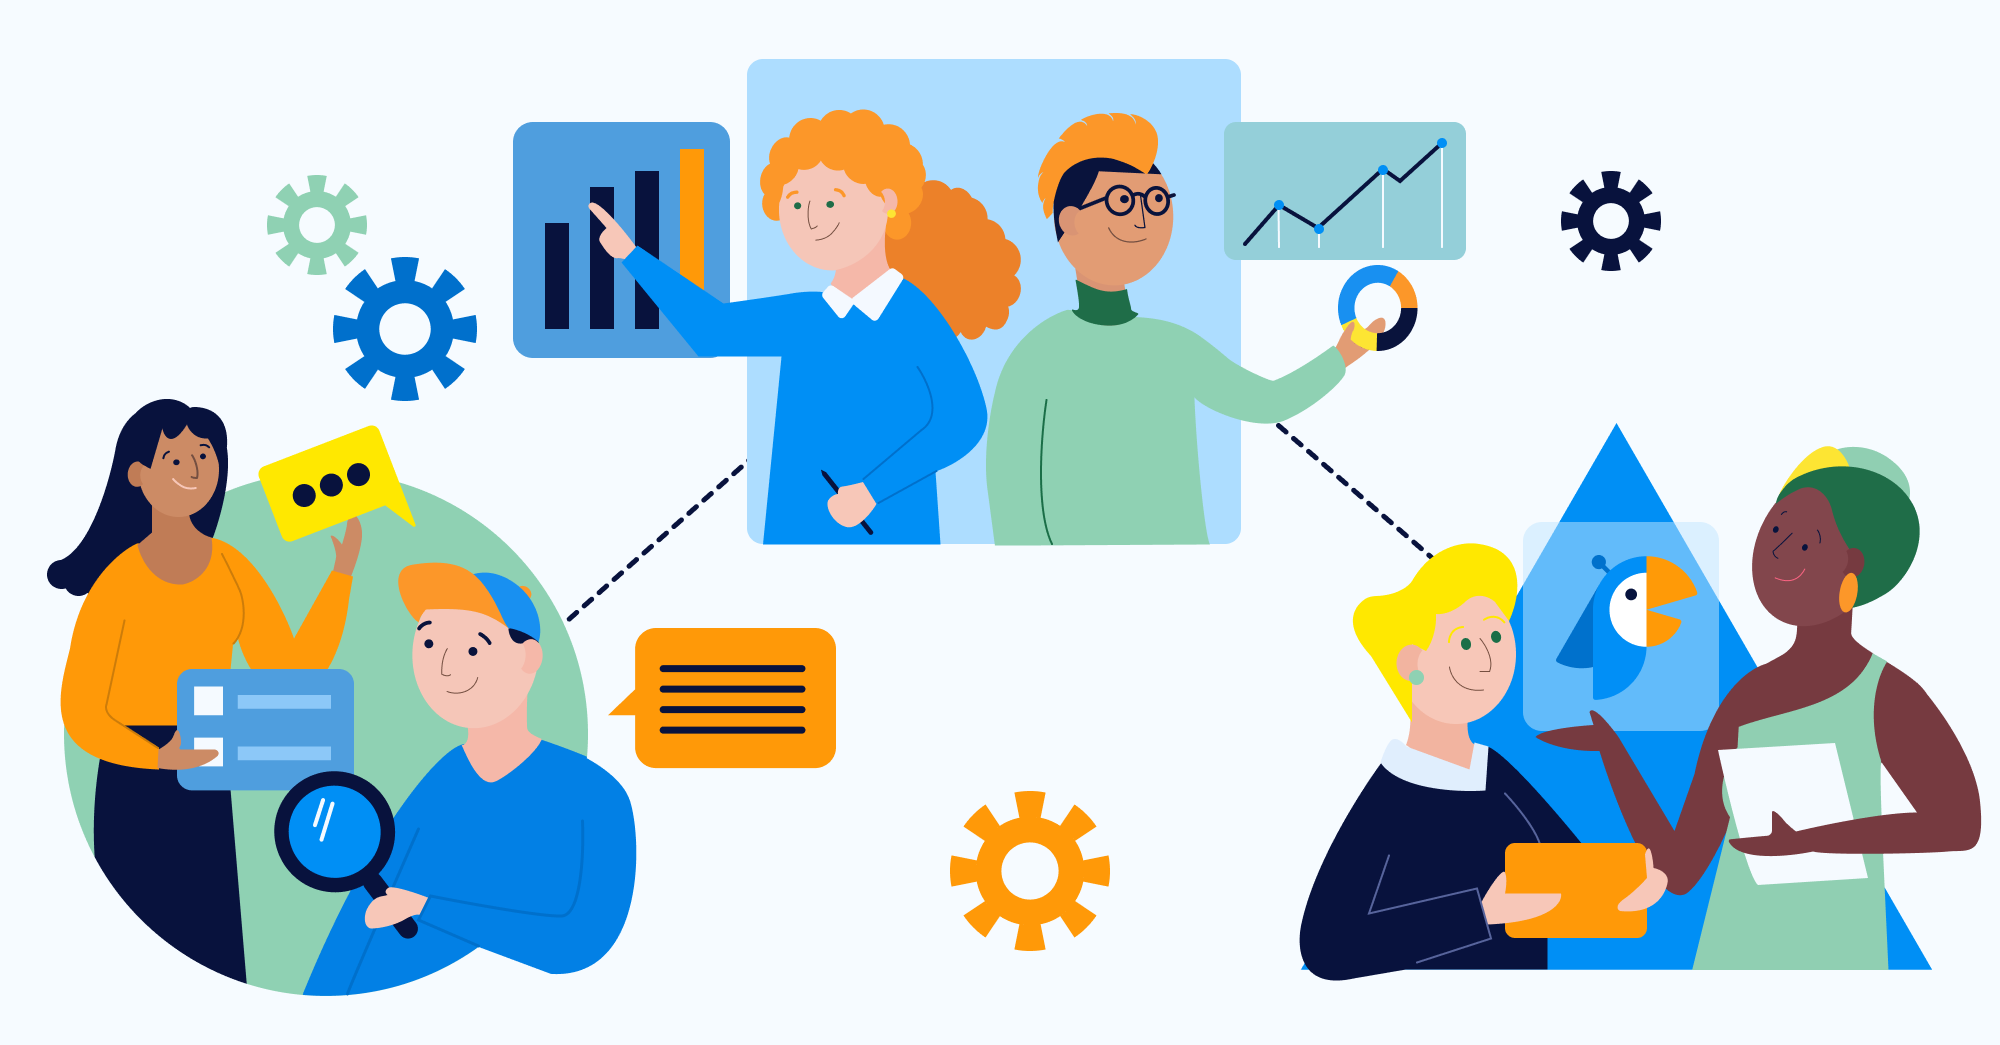 Digital workplace: illustration of people working together